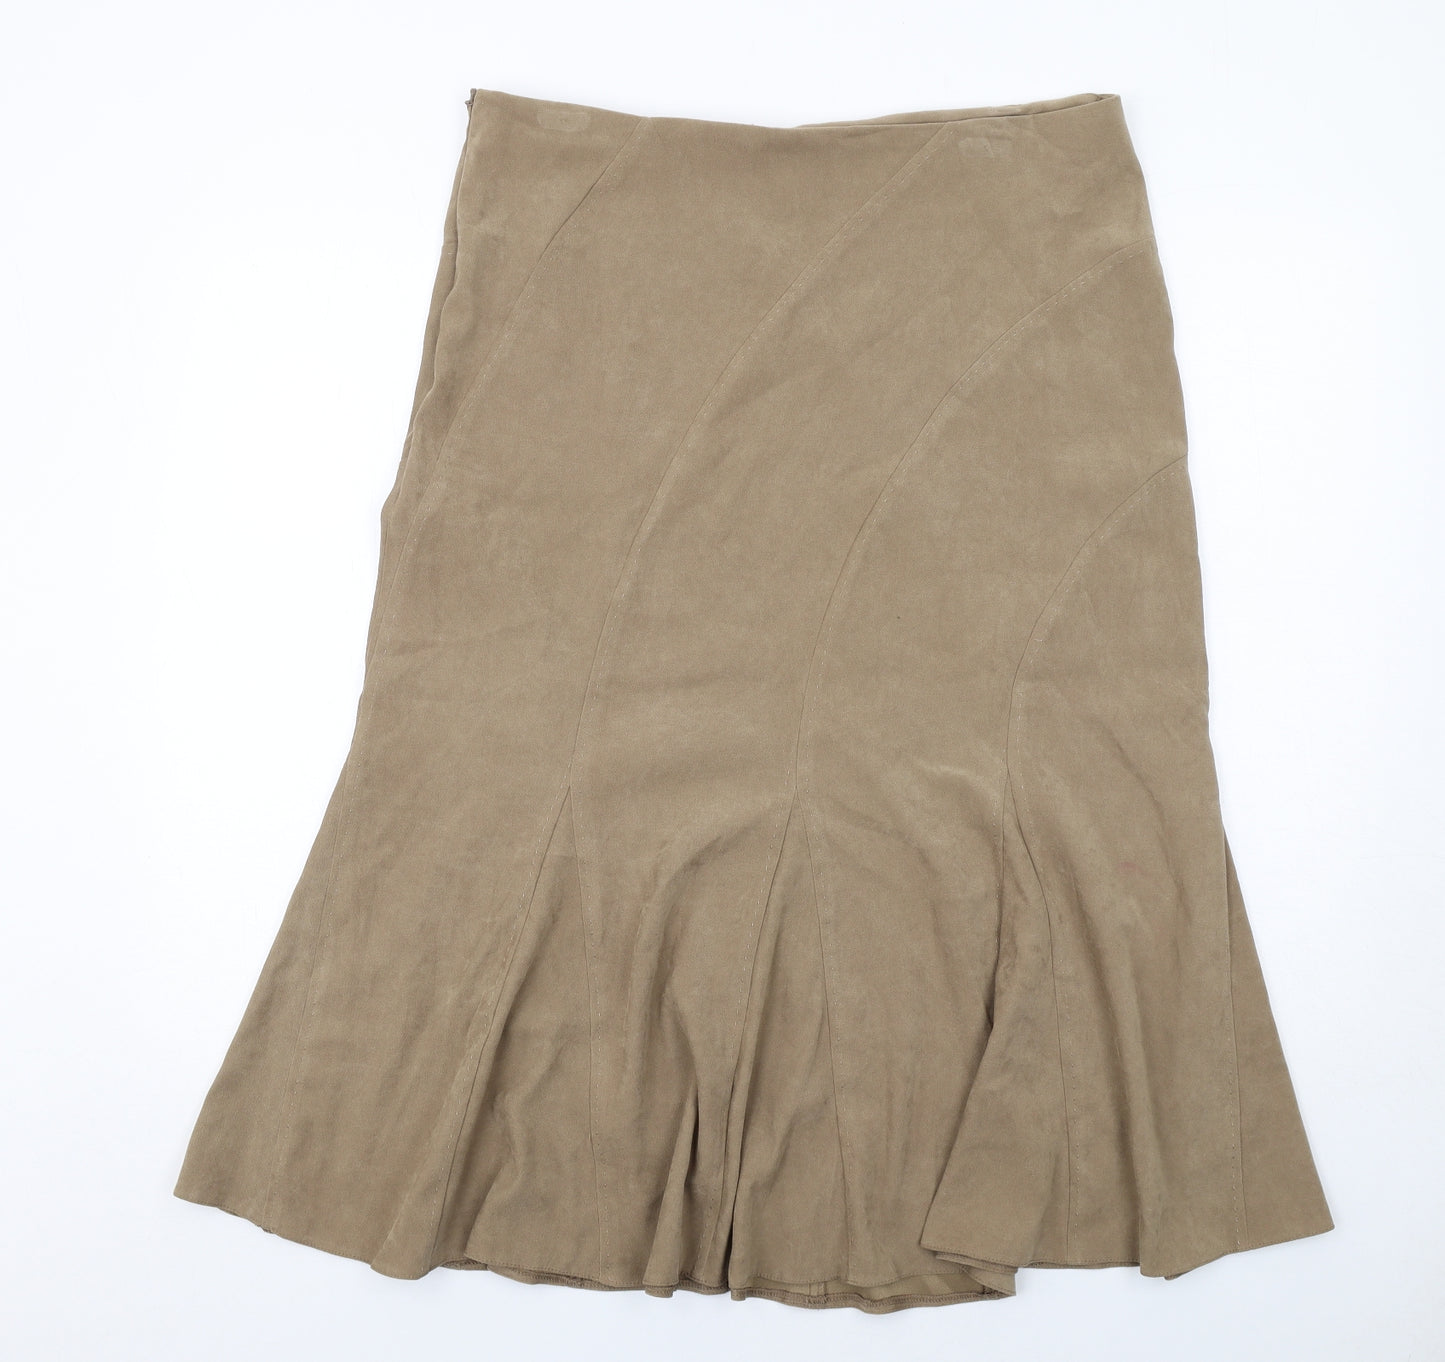 Mia Moda Womens Brown Polyester Swing Skirt Size 16 Zip